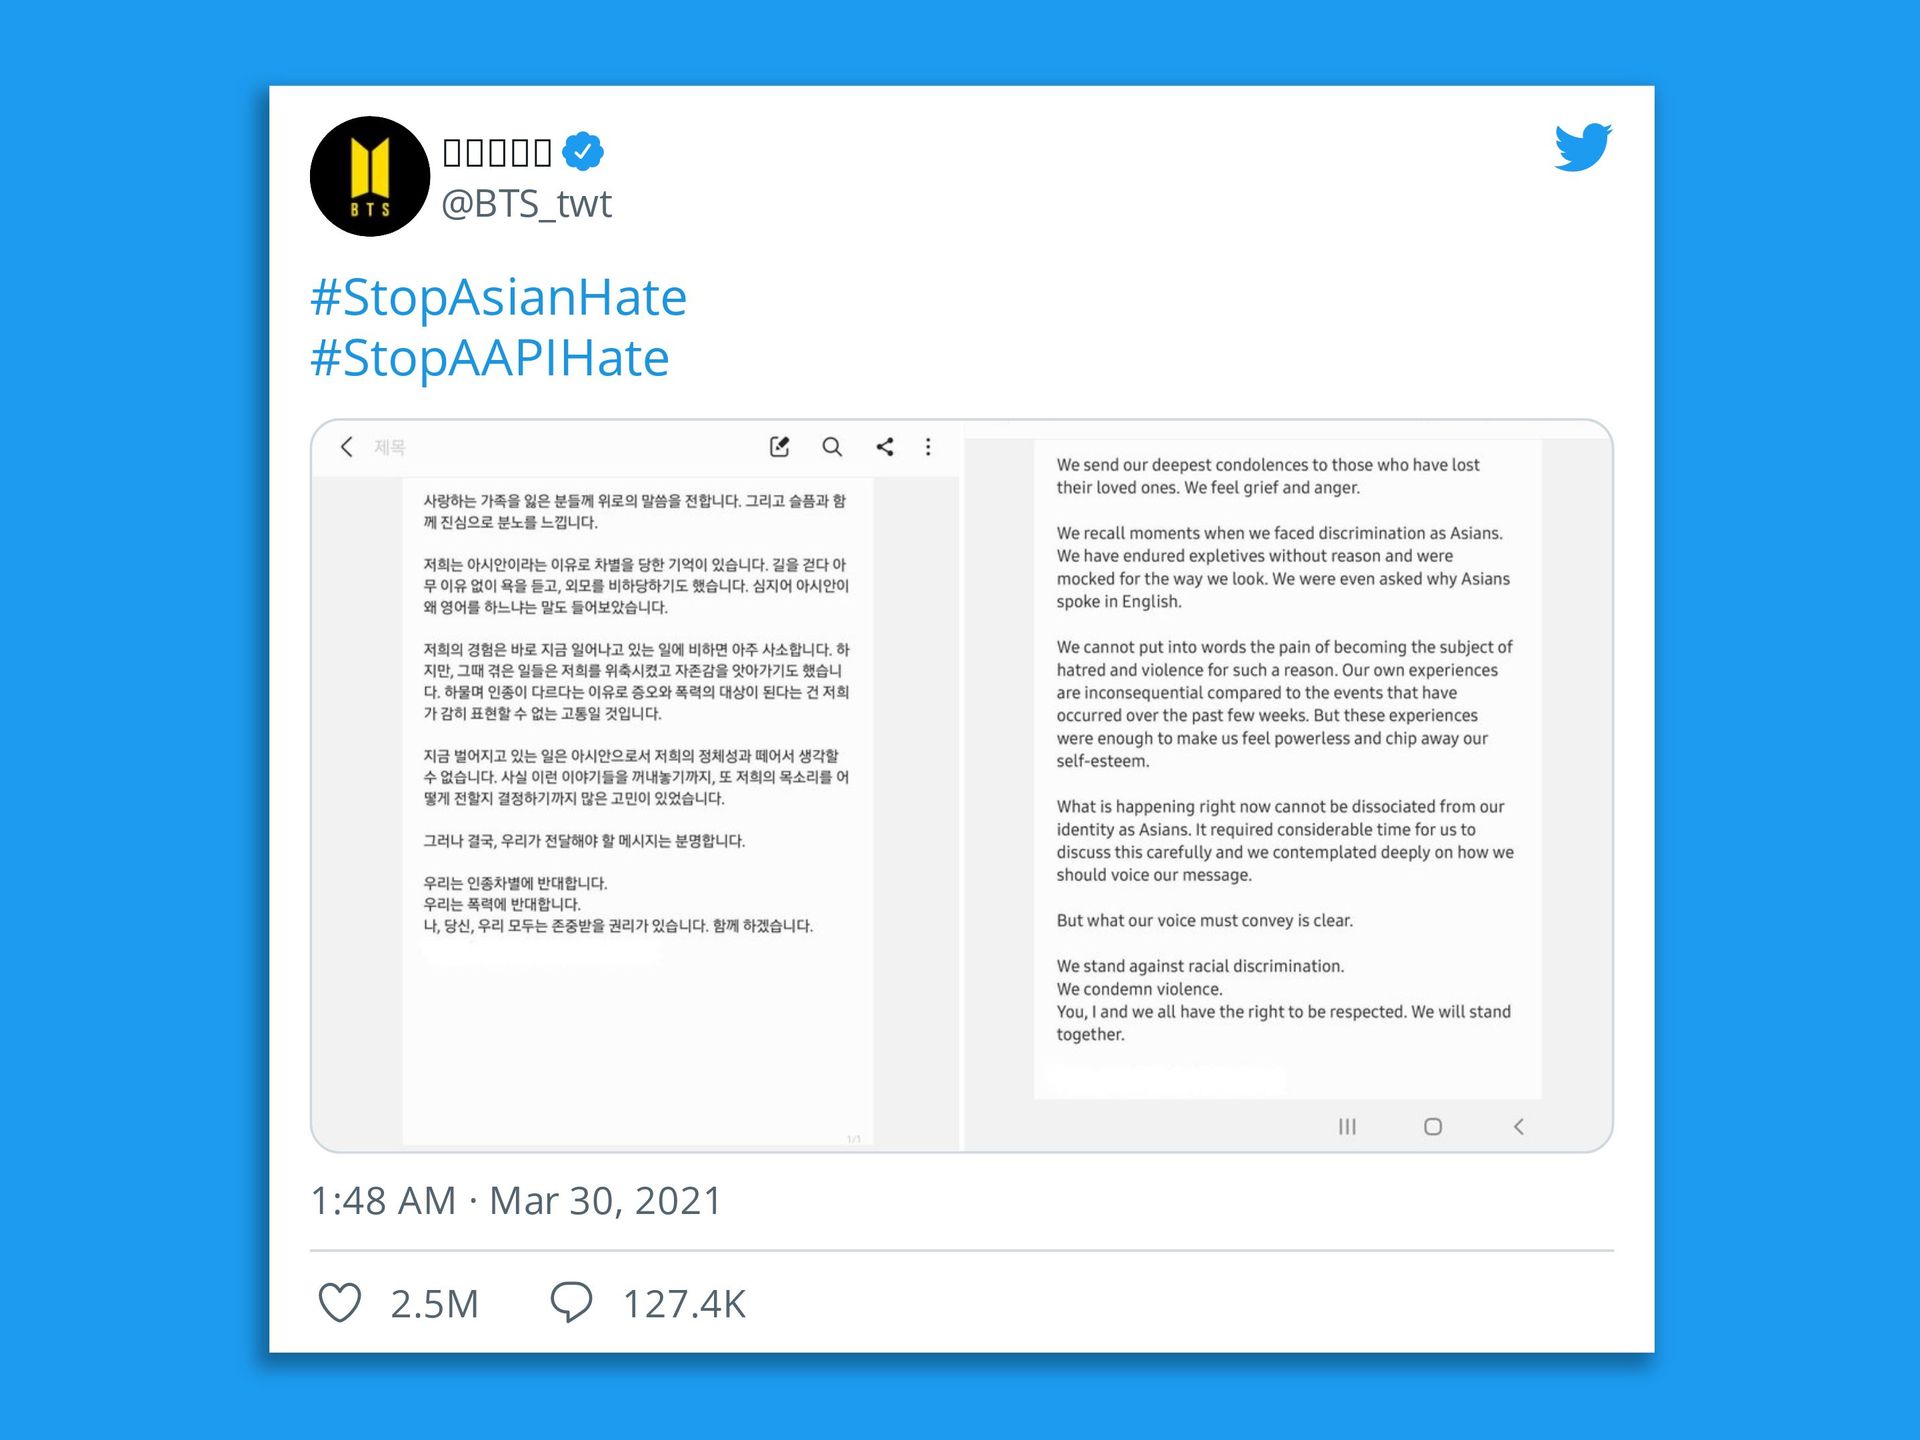 Twitter Reveals BTS's #StopAsianHate Tweet Was Most Retweeted